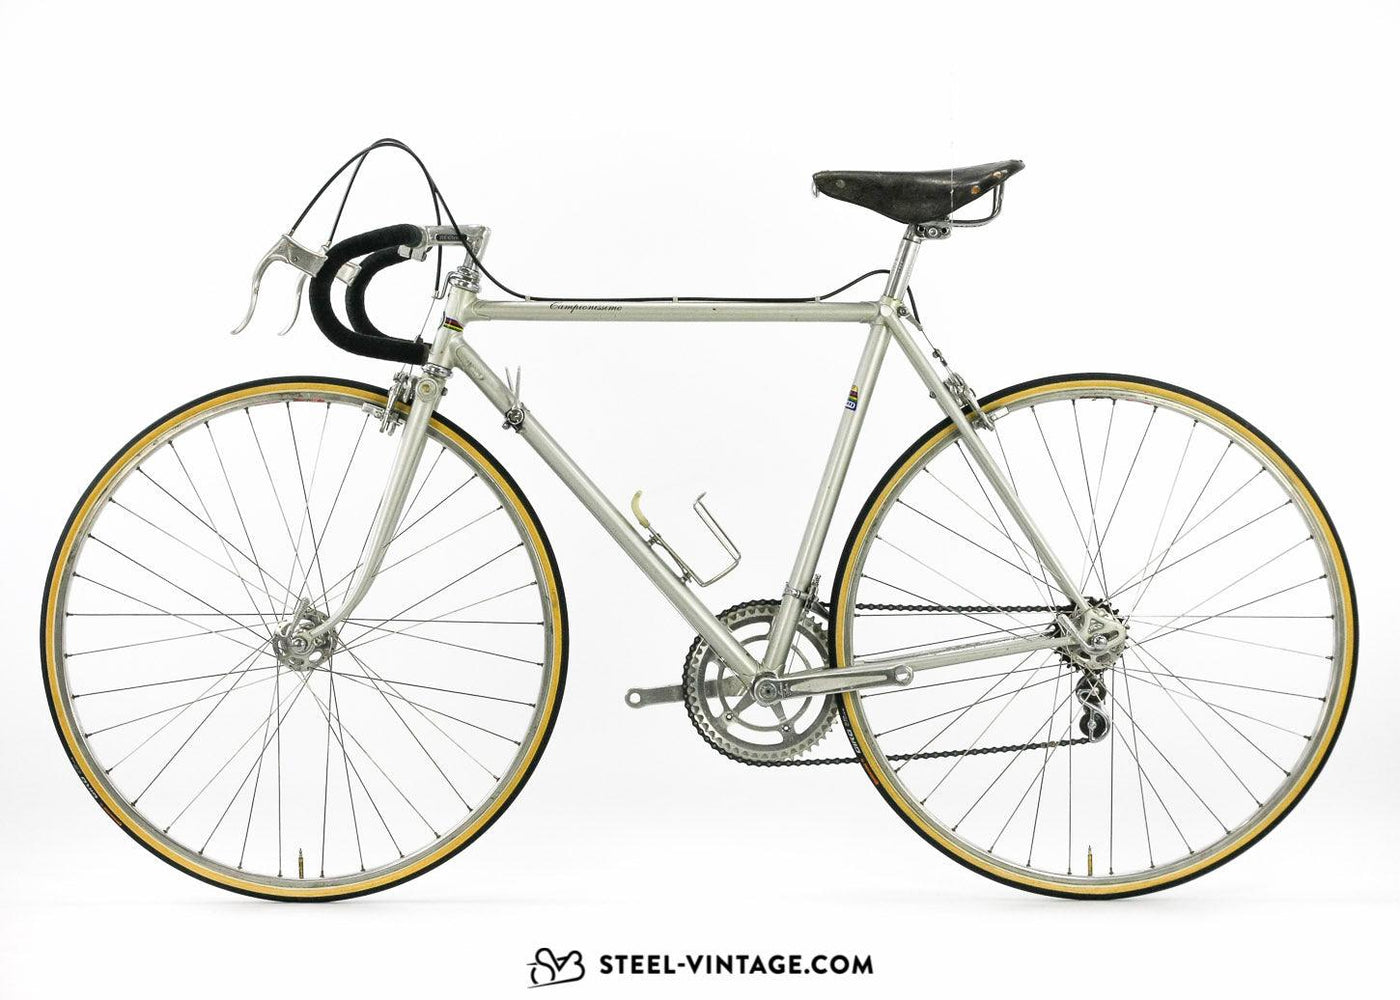 Fausto Coppi Campionissimo Classic Road Bike 1960s - Steel Vintage Bikes